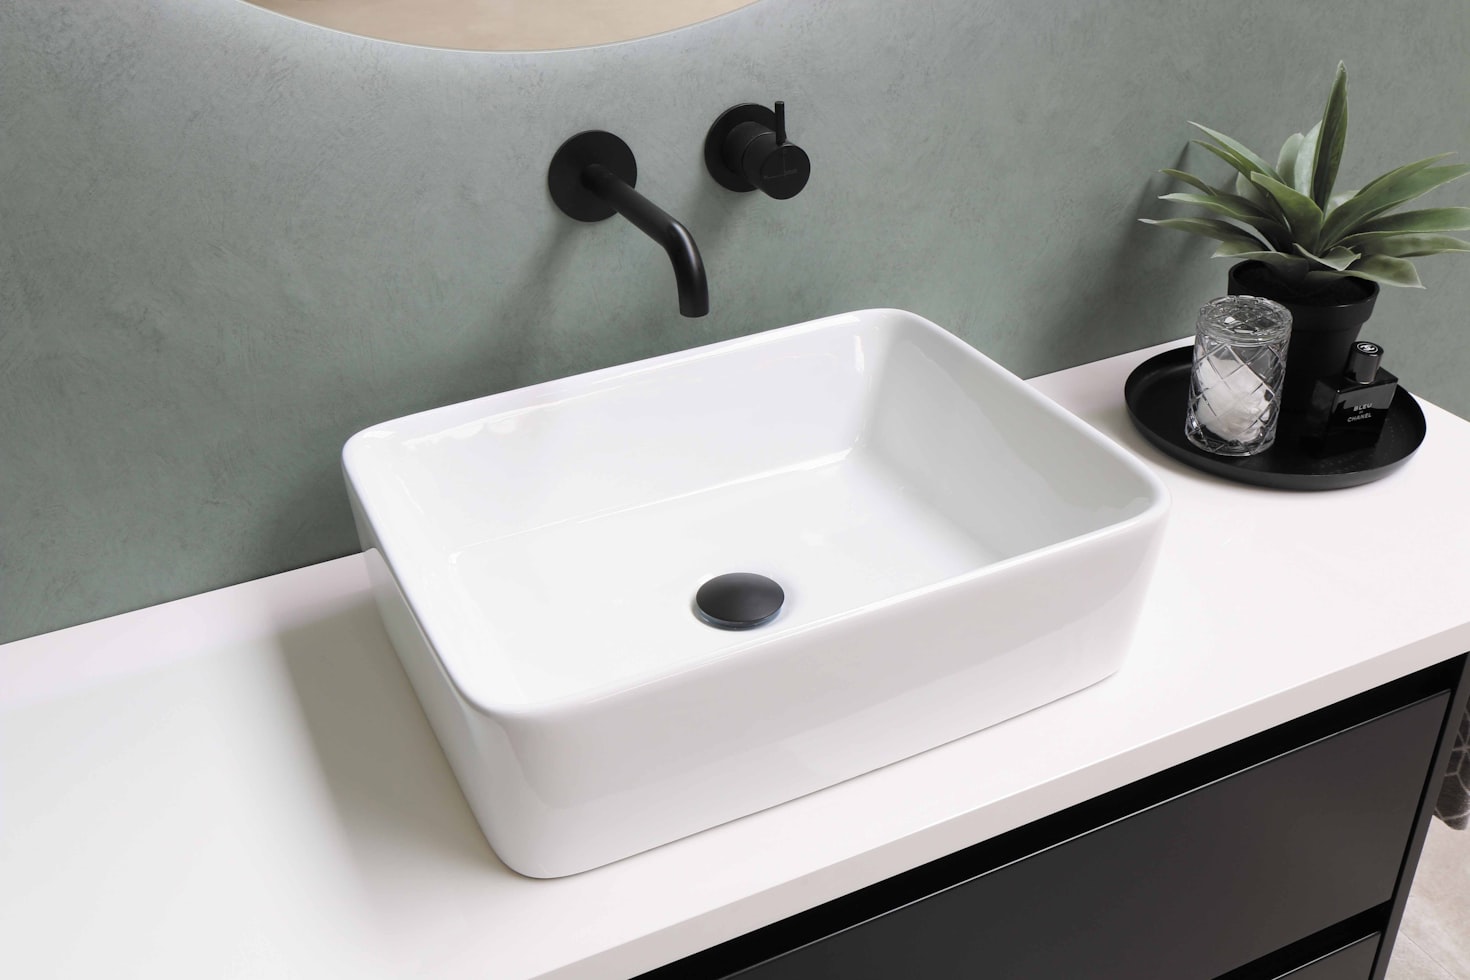 10 Best Faucets For Pedestal Sinks Based On User Rating